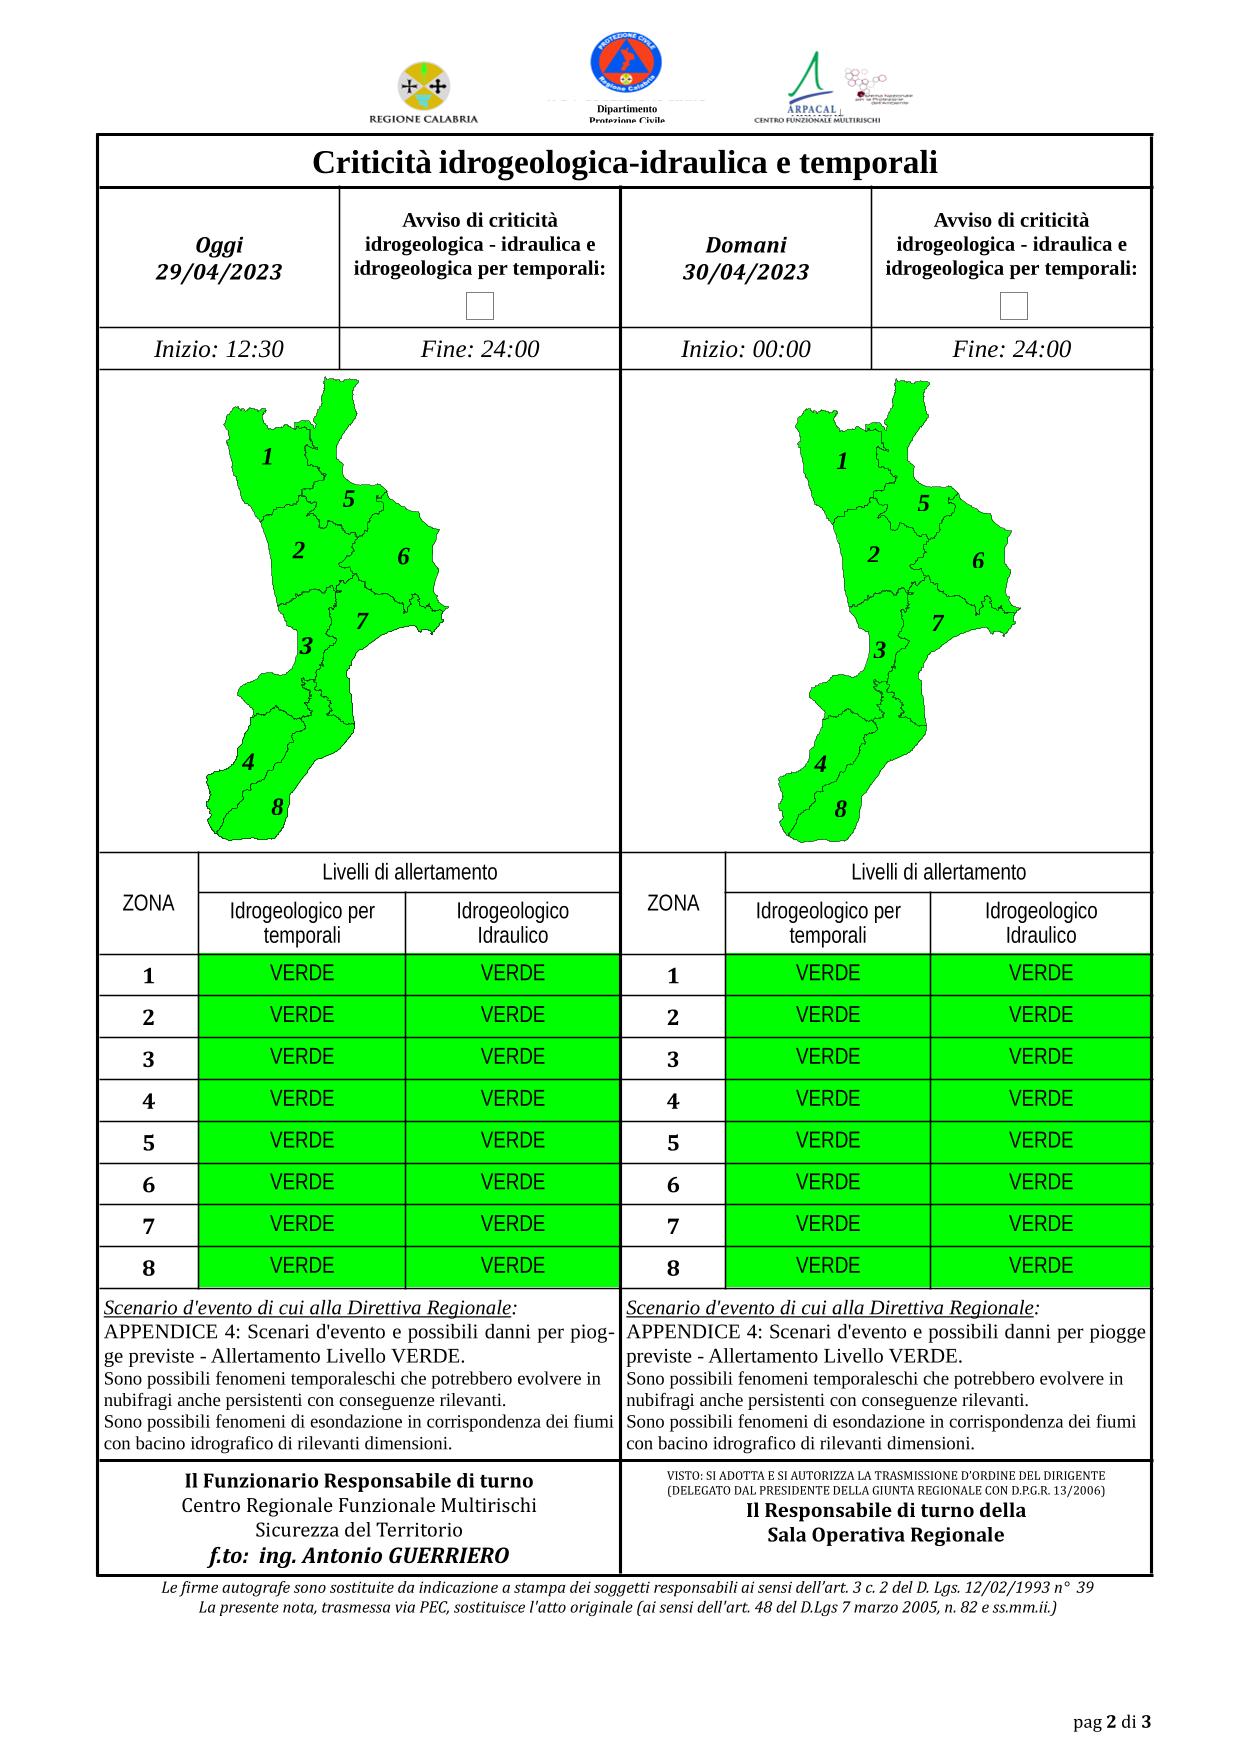 Criticità idrogeologica-idraulica e temporali in Calabria 29-04-2023